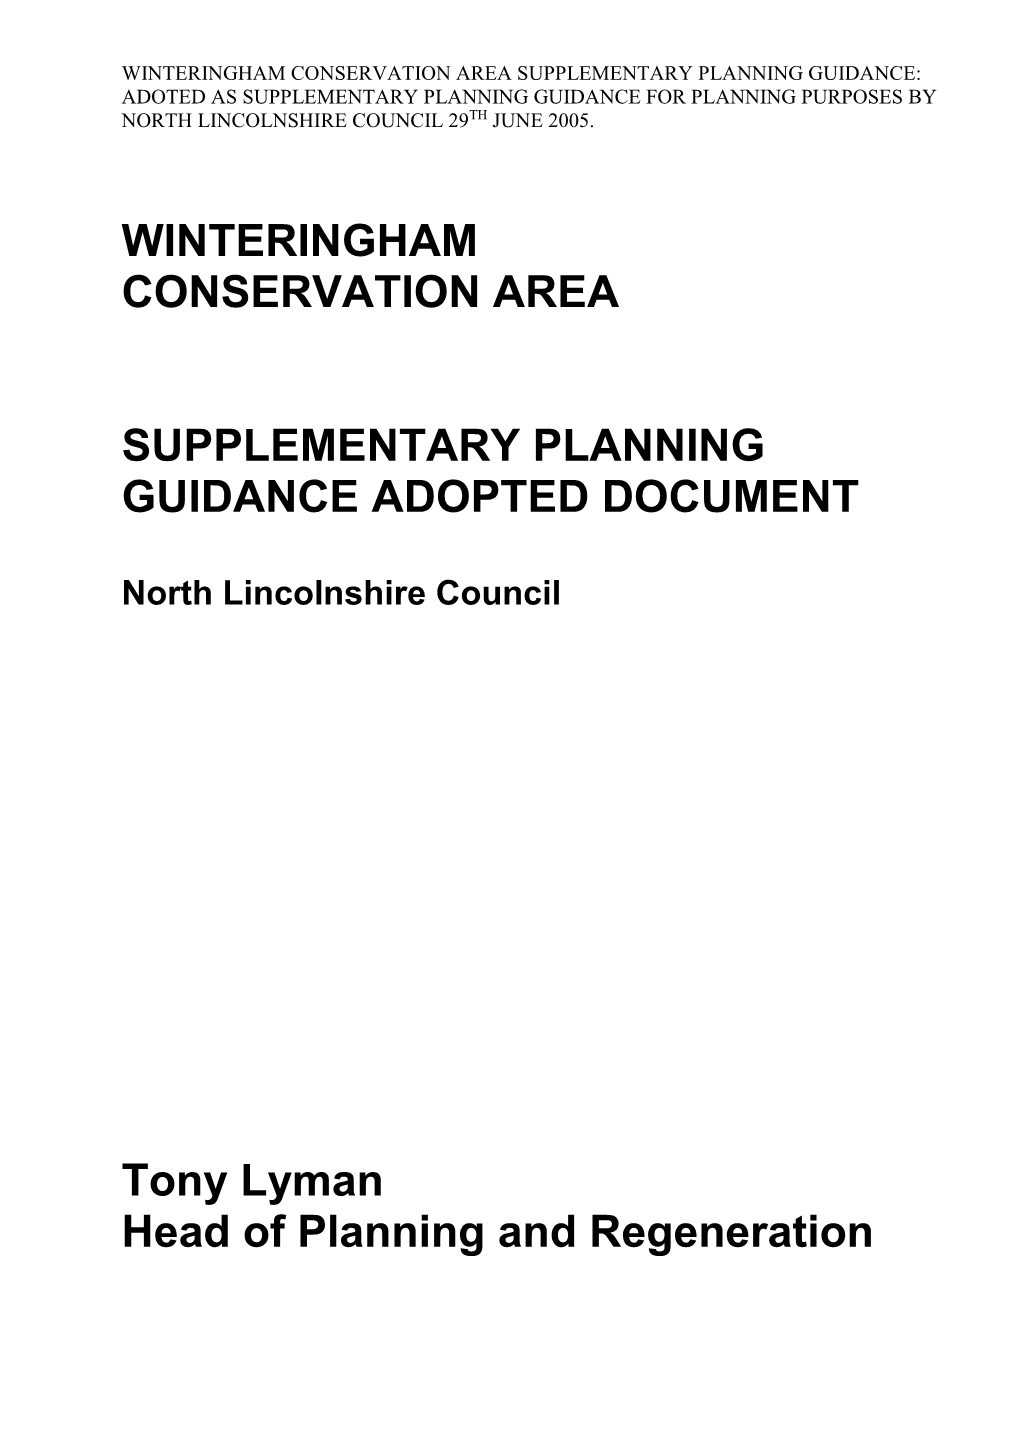 Winteringham Supplementary Planning Guidance